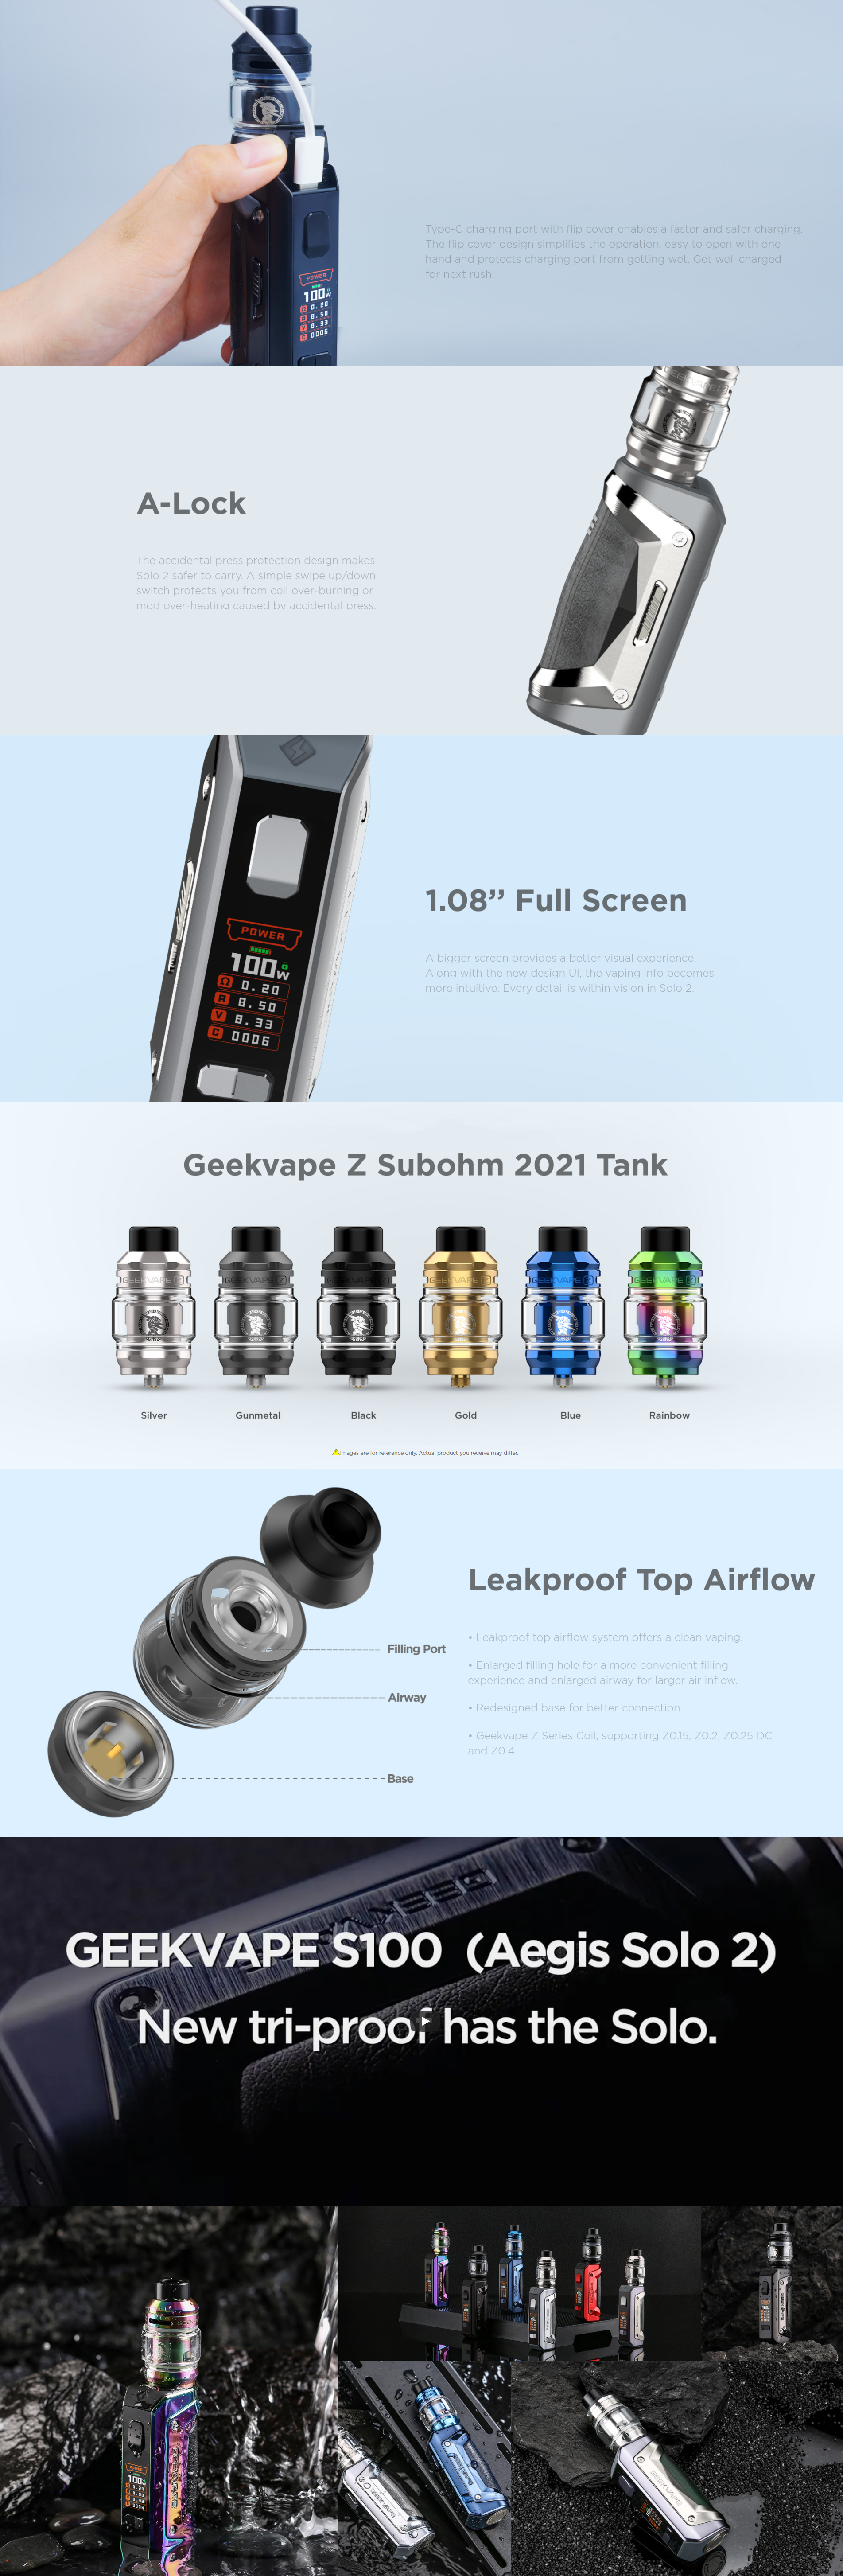 I-Geekvape S100 Kit1 2 1 (1)